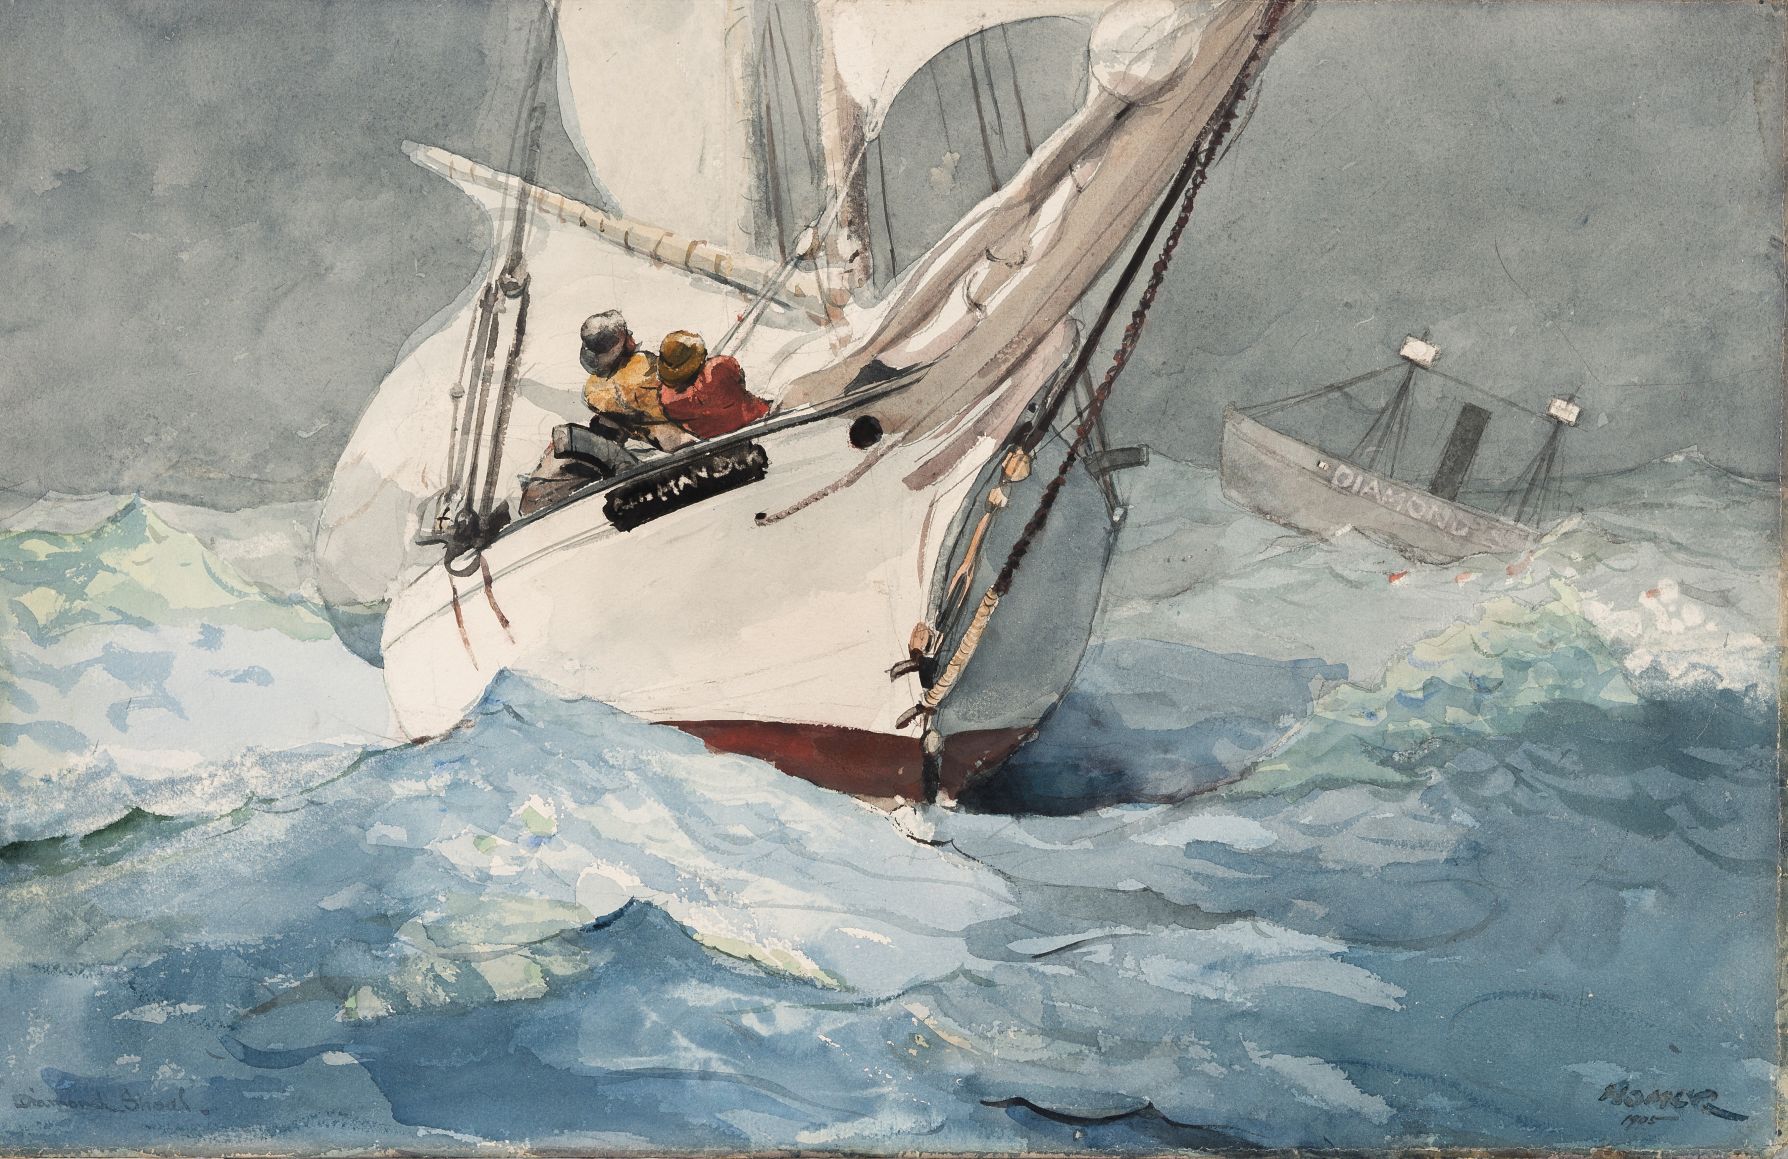 American watercolors fill large exhibit at Philadelphia Museum of